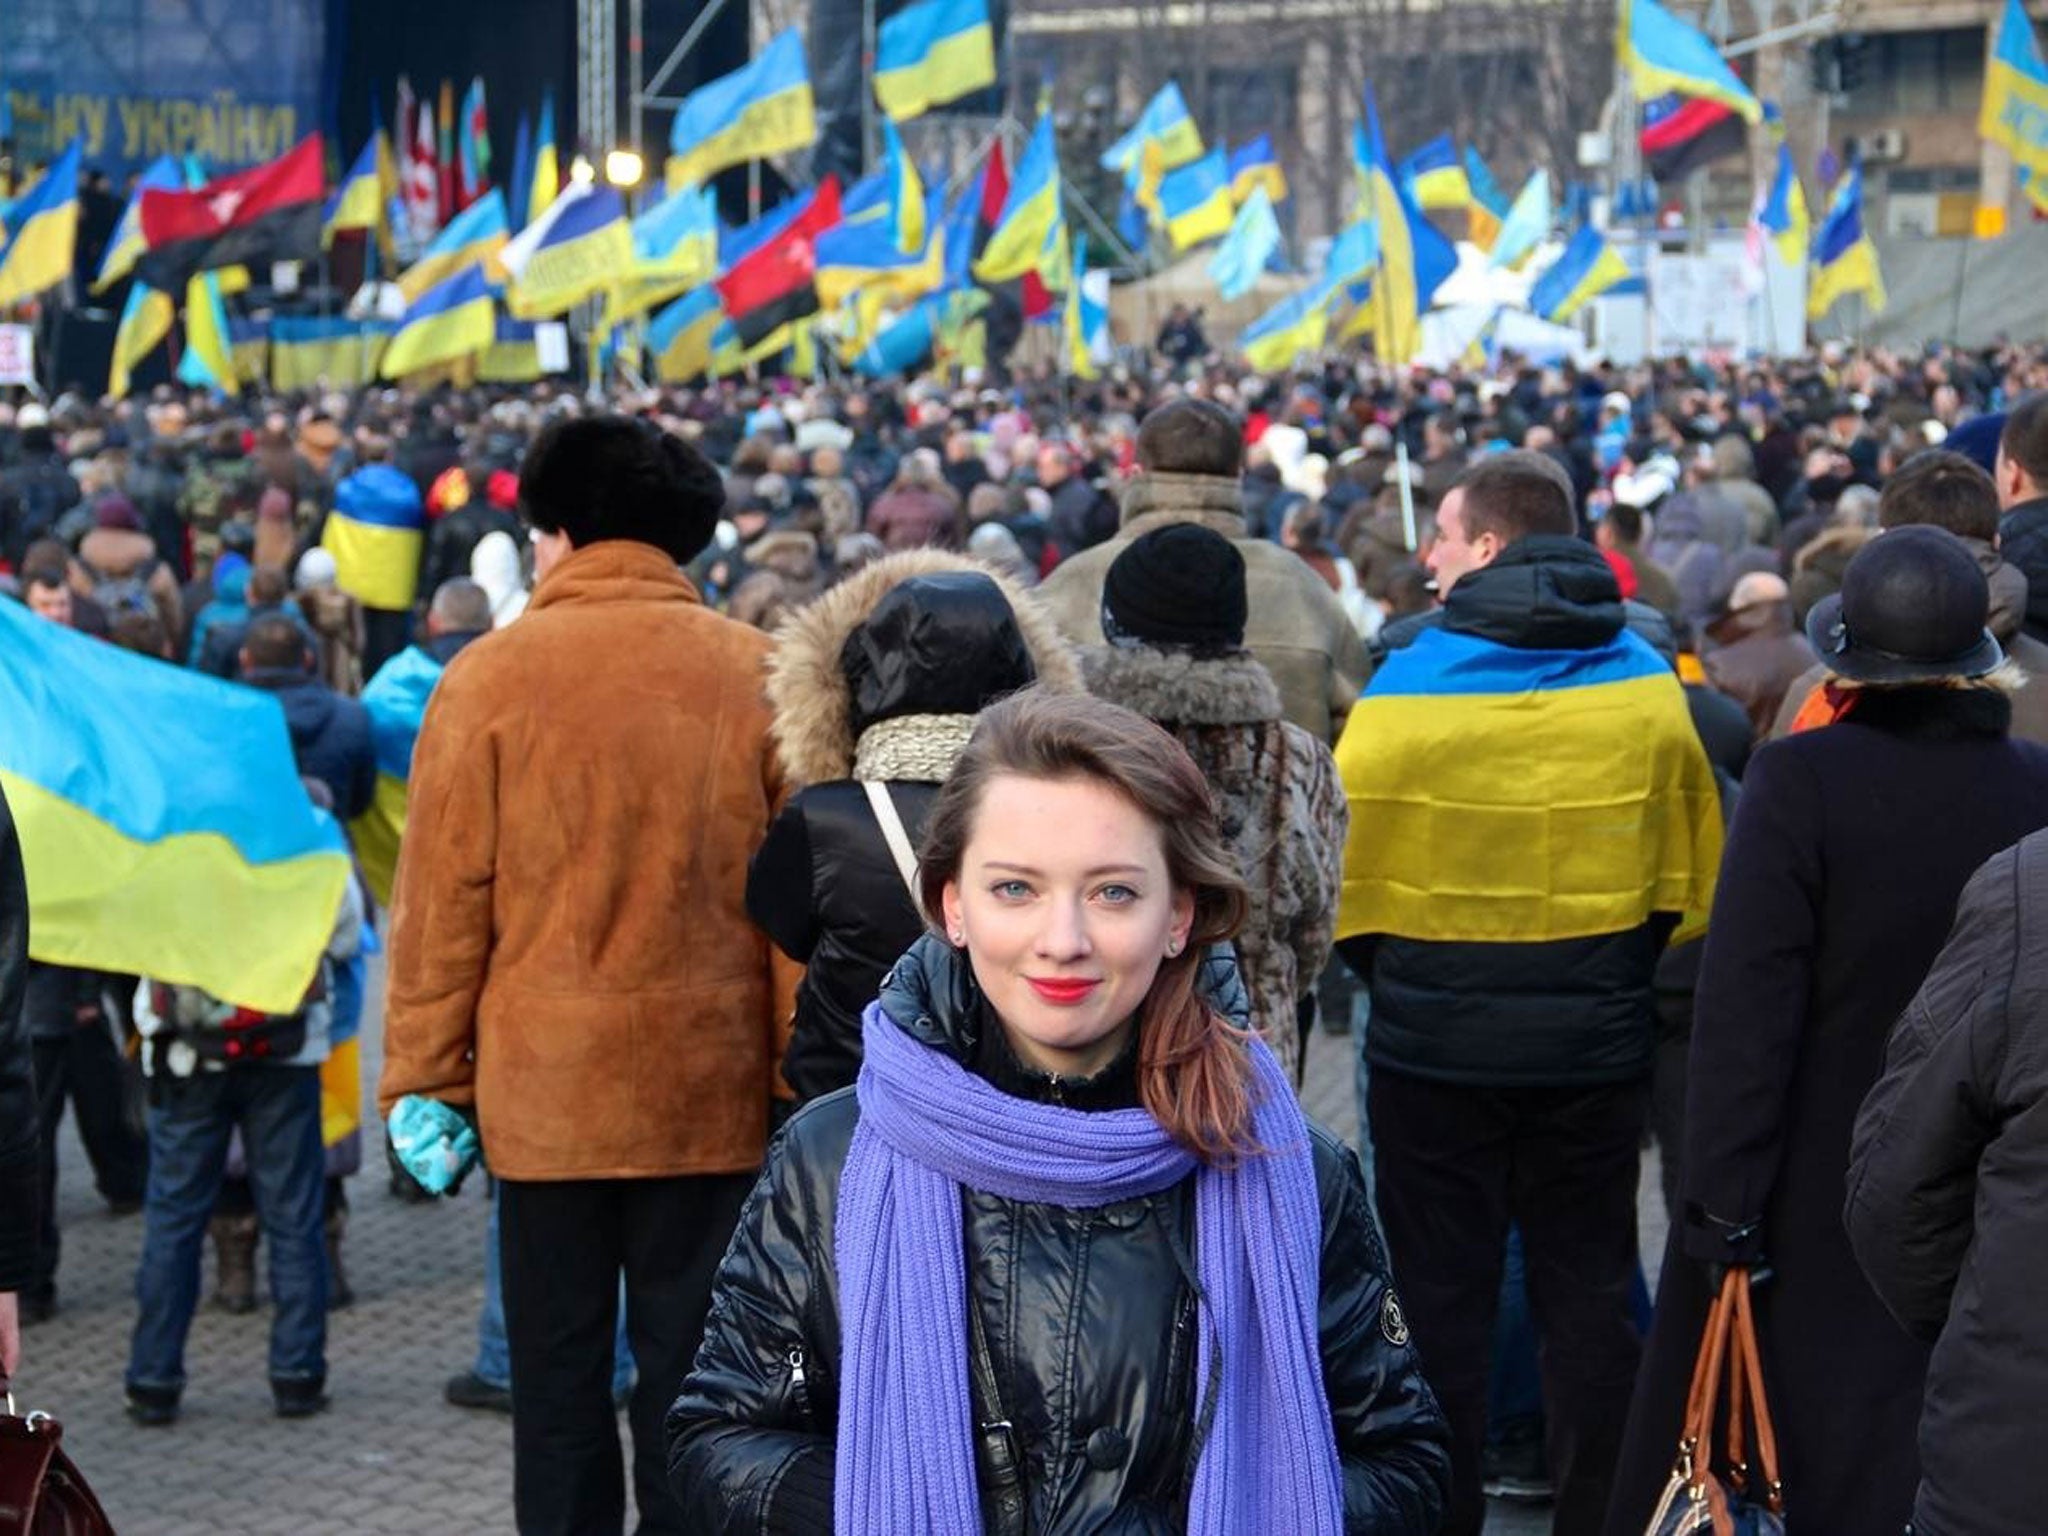 Sophia, 23, joins fellow demonstrators on Kiev’s Independence Square